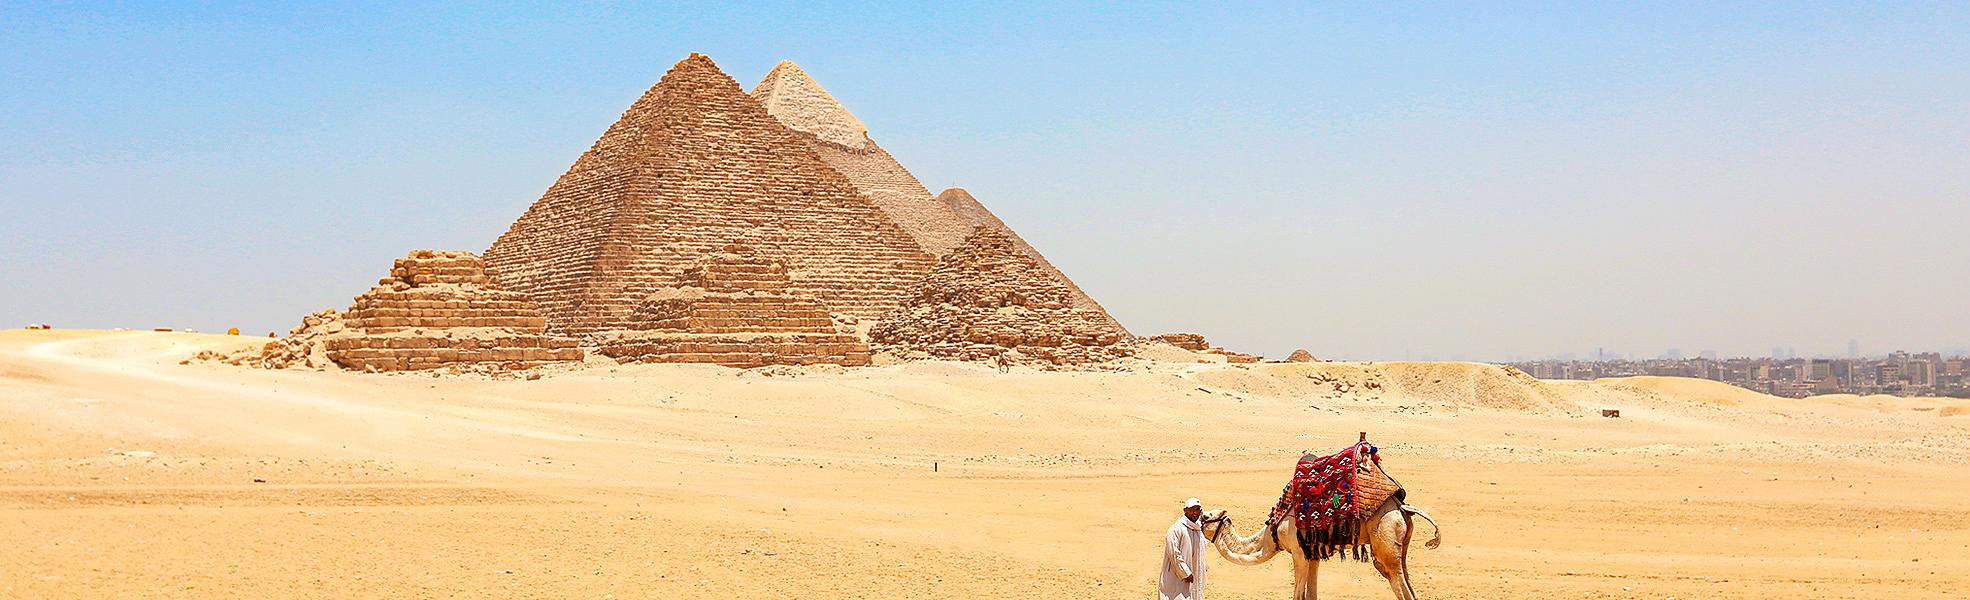 Cairo Essence with Pyramids